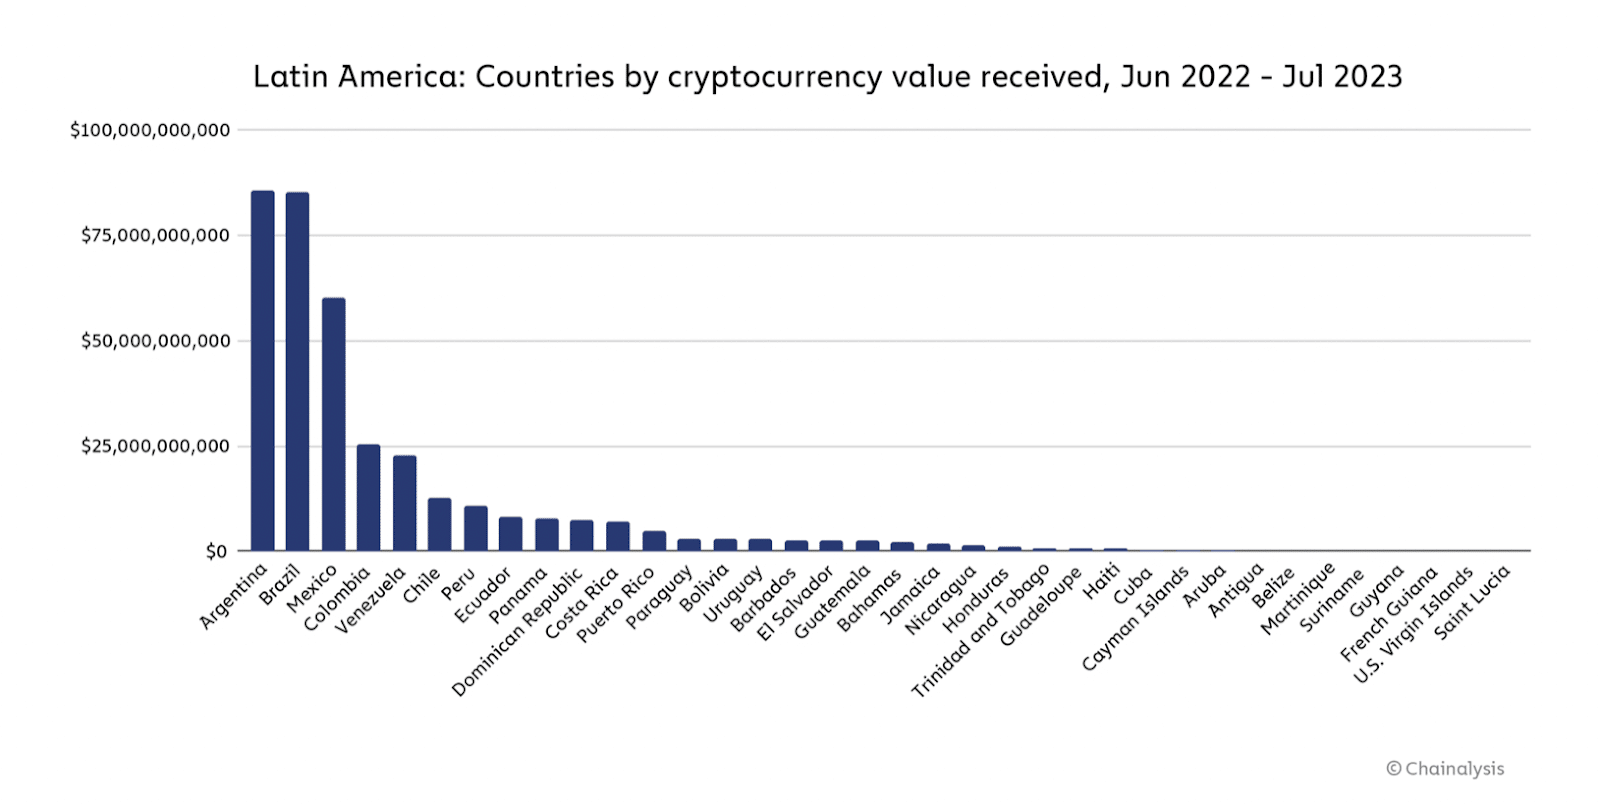 Latin American's contribution to crypto activity